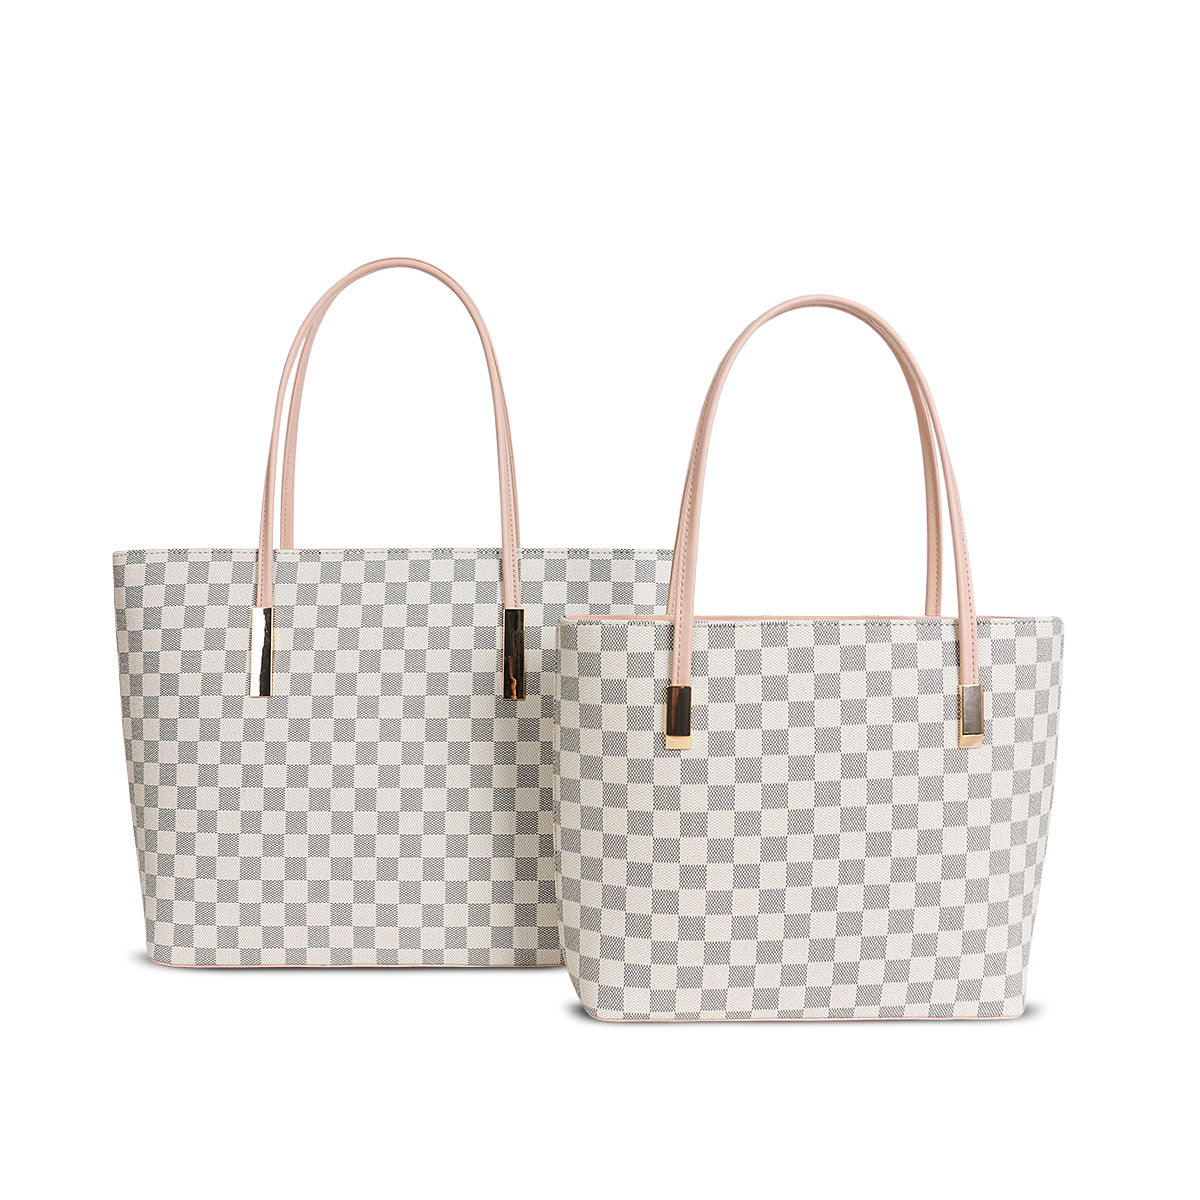 LYDC Bow Details 2 Pack Shoulder / Tote Handbags different patterns (Large & Medium Set)